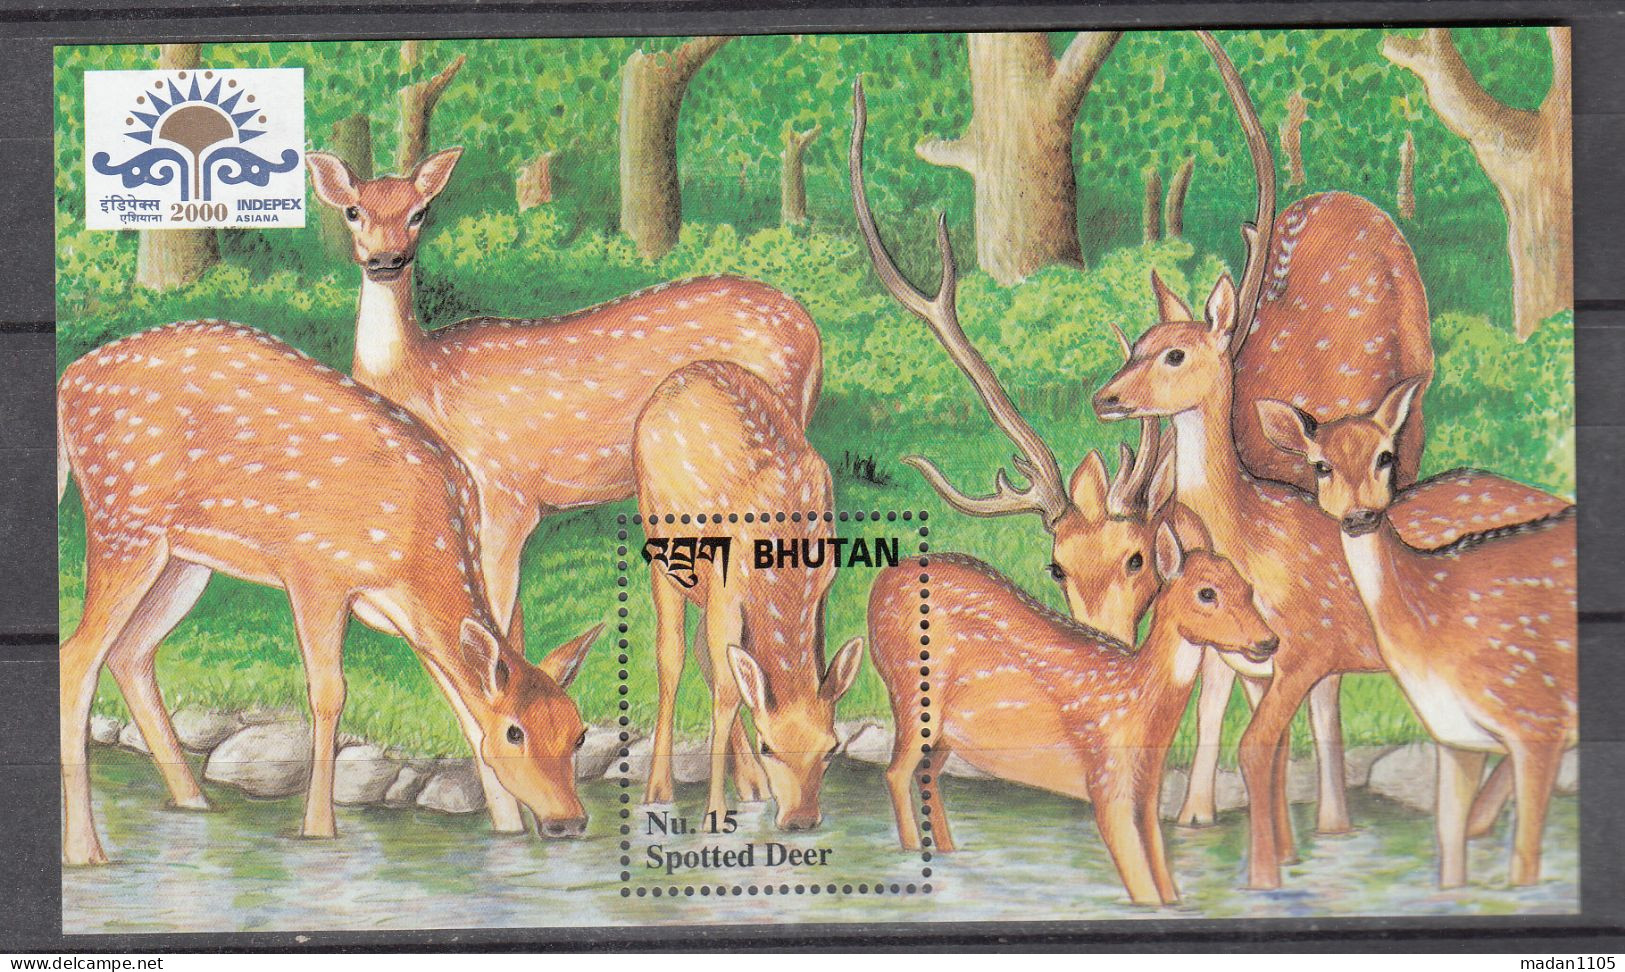 BHUTAN, 2000,  International Stamp Exhibition "Indepex Asiana 2000" - Calcutta, India - Fauna And Flora, MS, MNH, (**) - Bhoutan